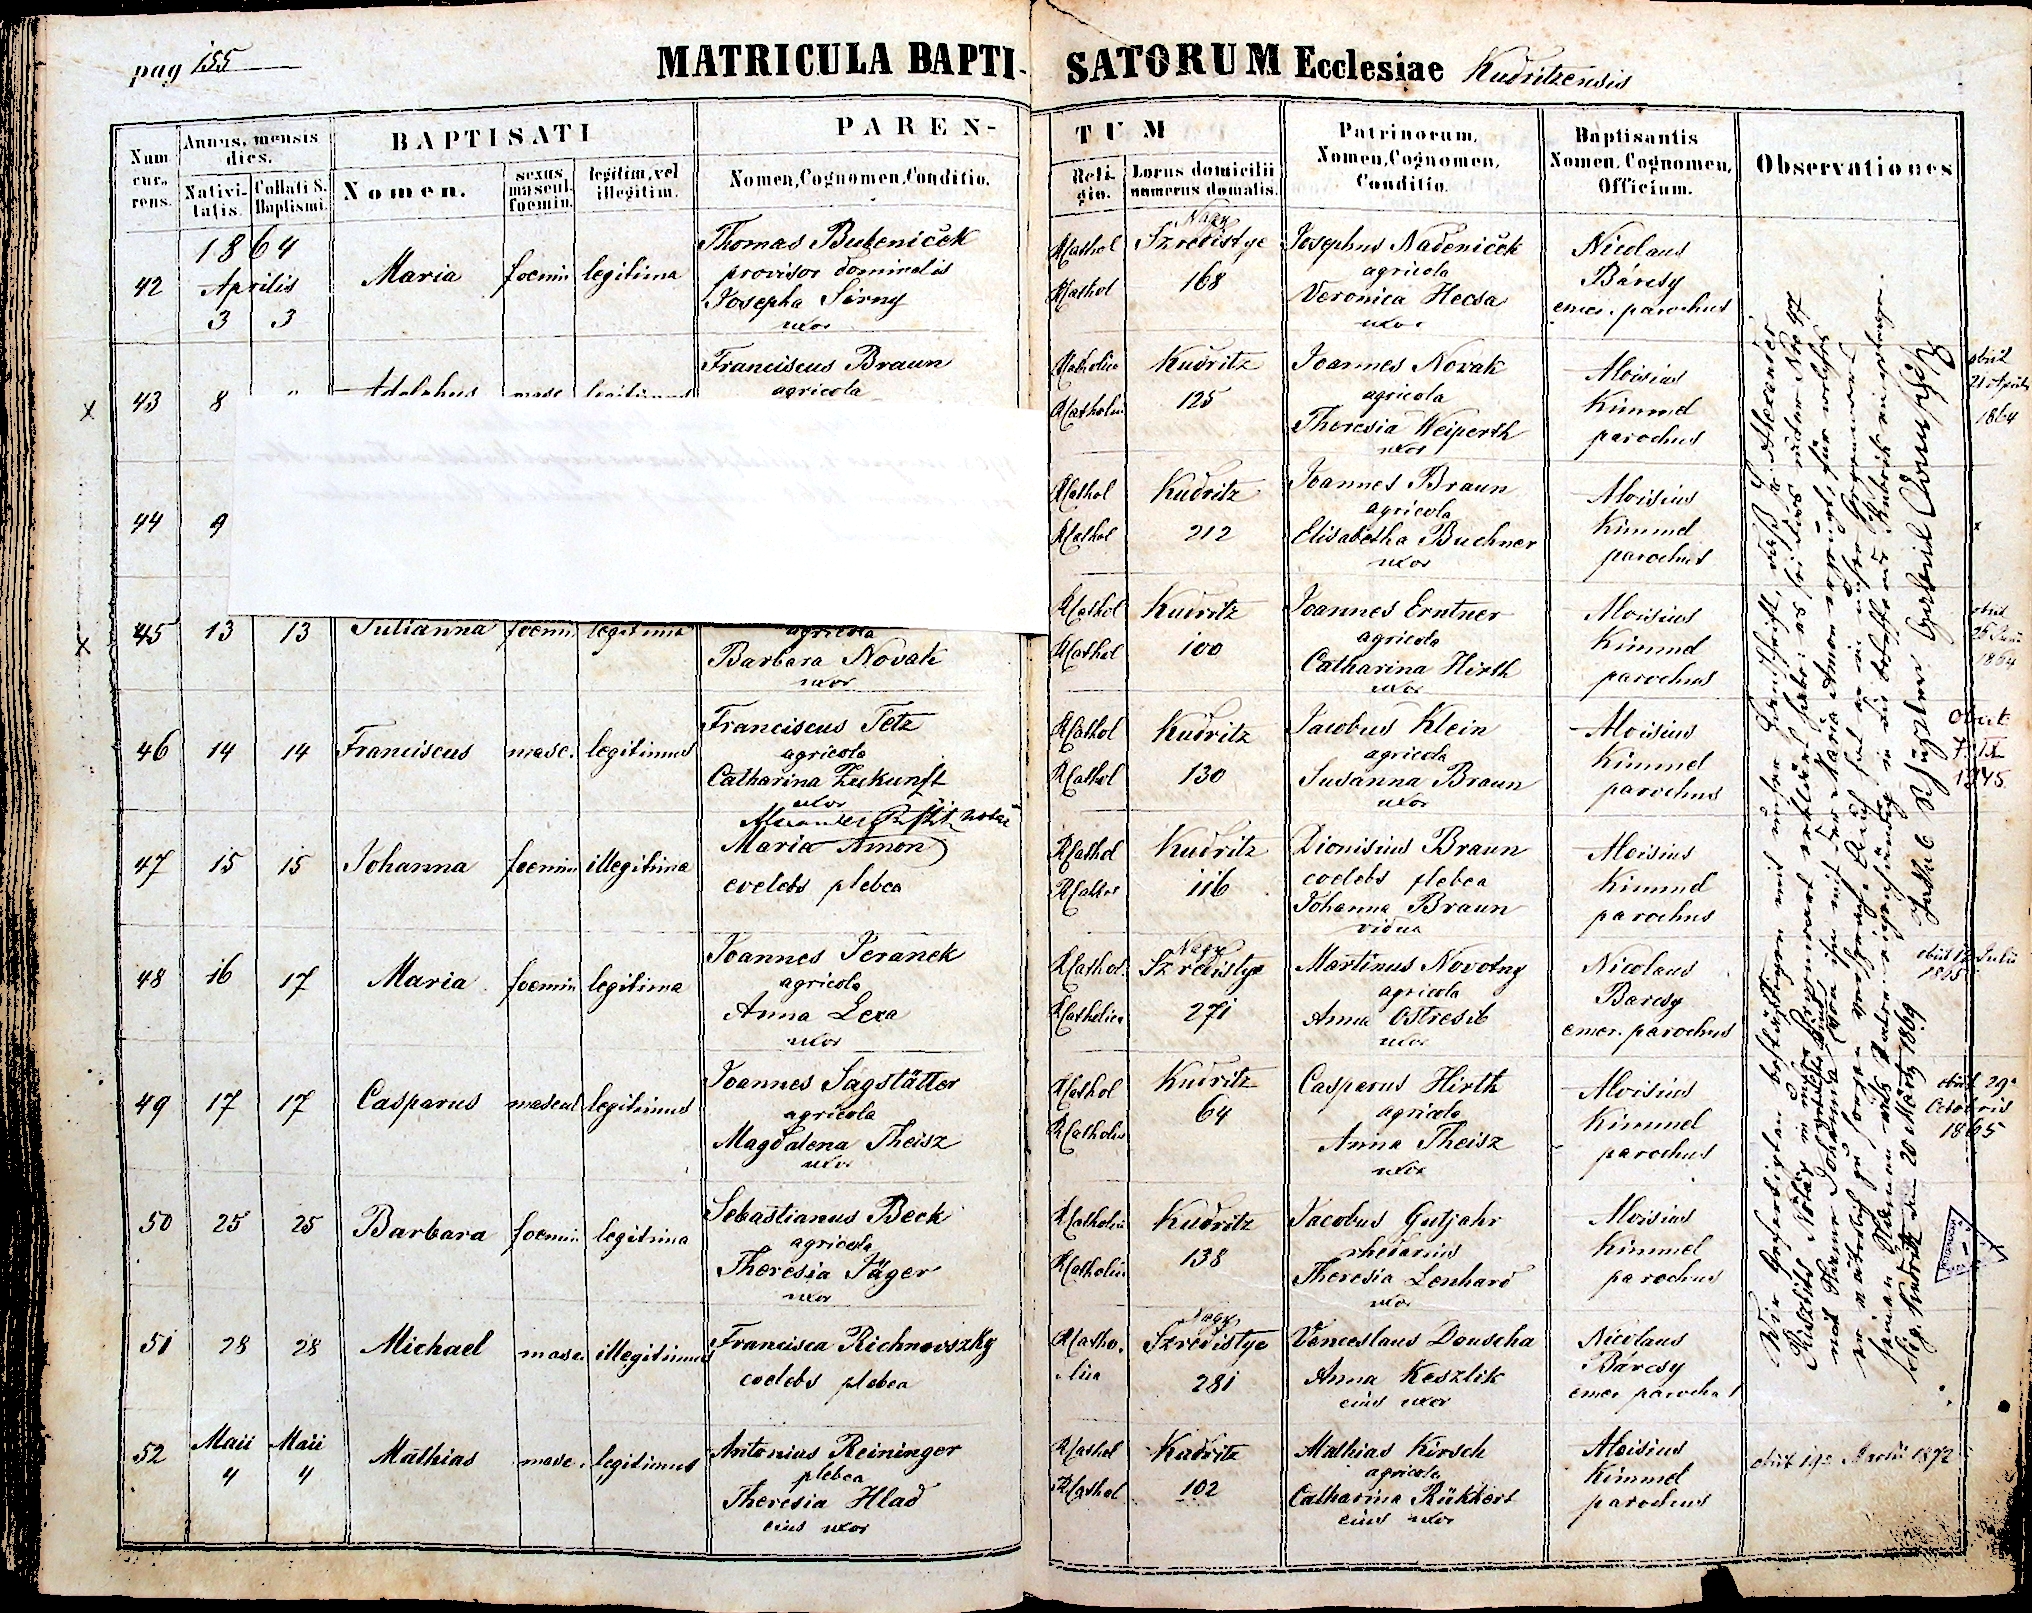 images/church_records/BIRTHS/1852-1870B/155-bez dodatka